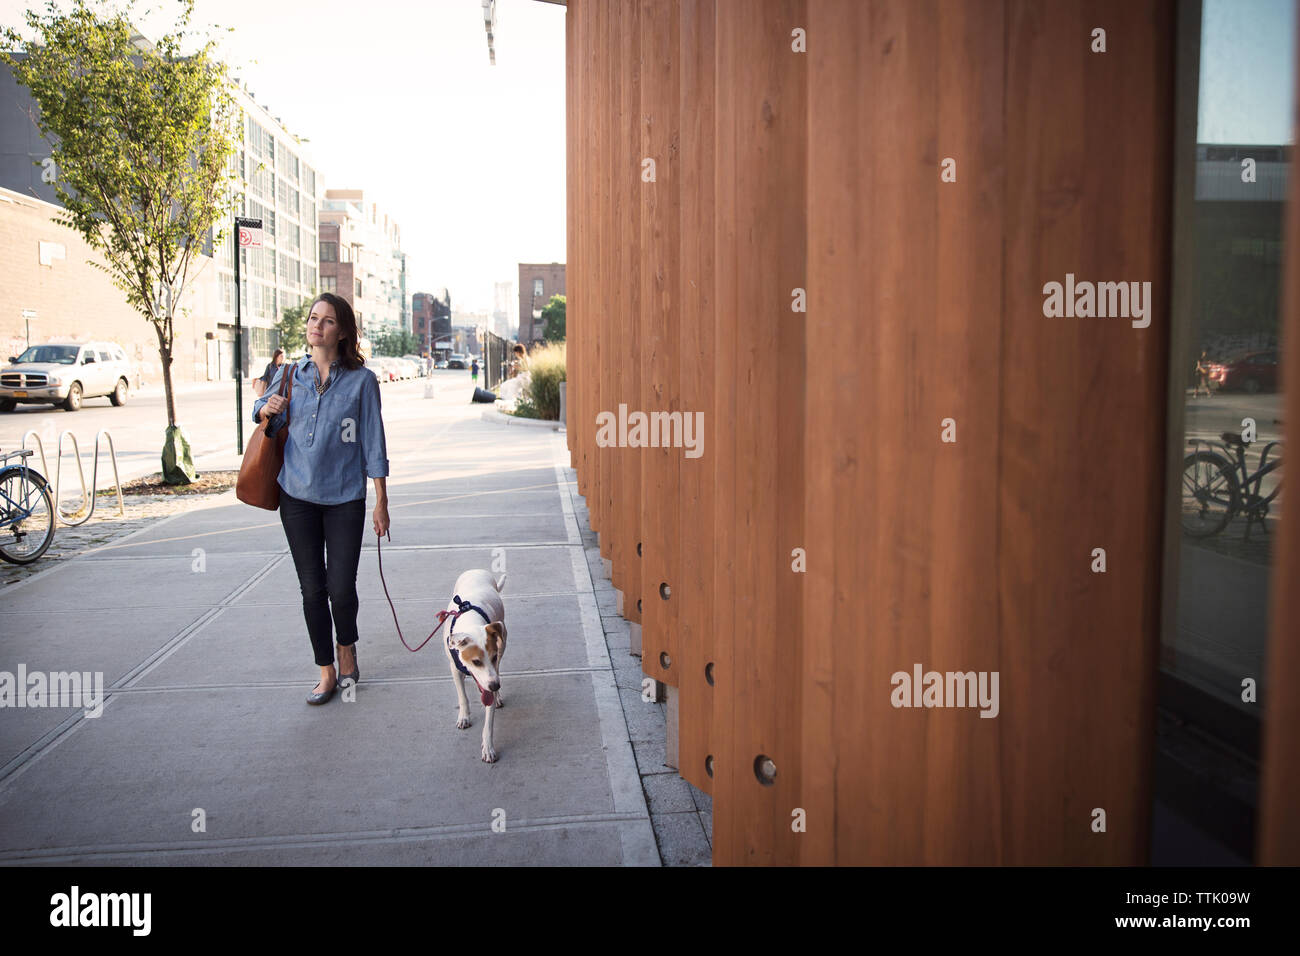 Thoughtful woman walking with dog on sidewalk par mur en bois en ville Banque D'Images